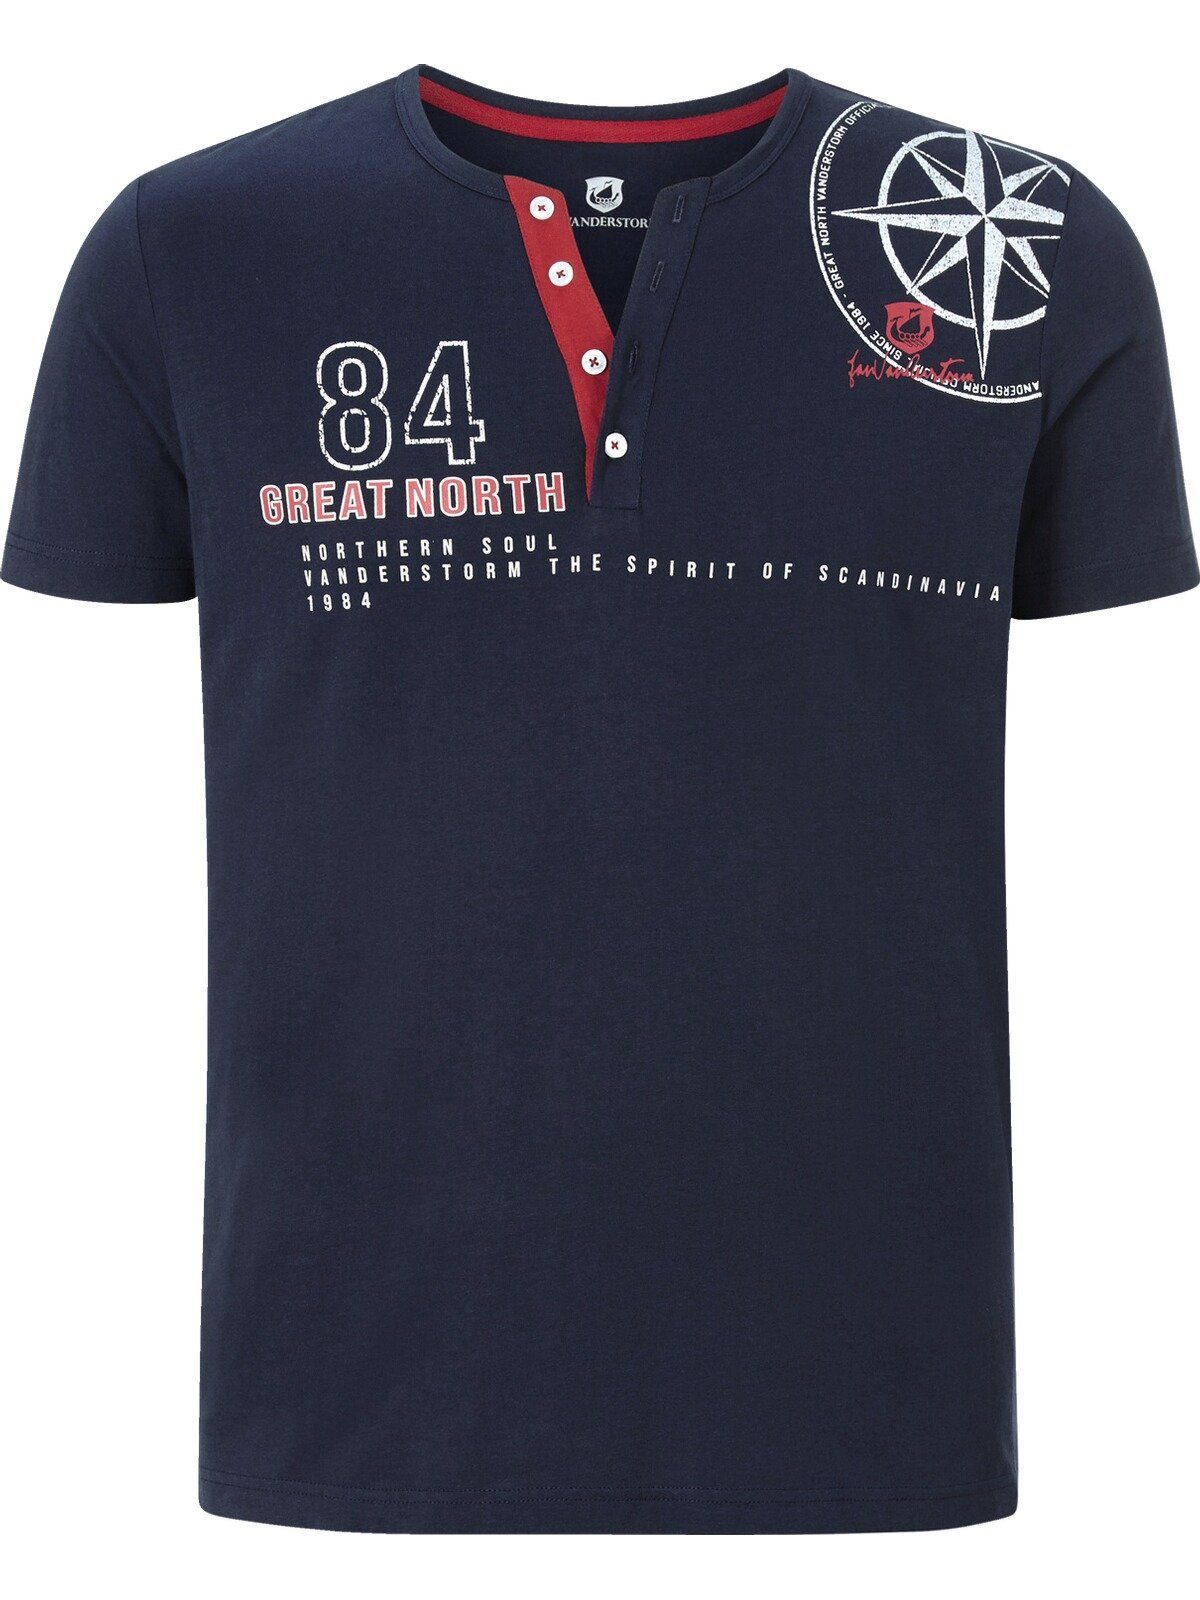 Baseball-Look im Jan Vanderstorm T-Shirt LINDRAD dunkelblau